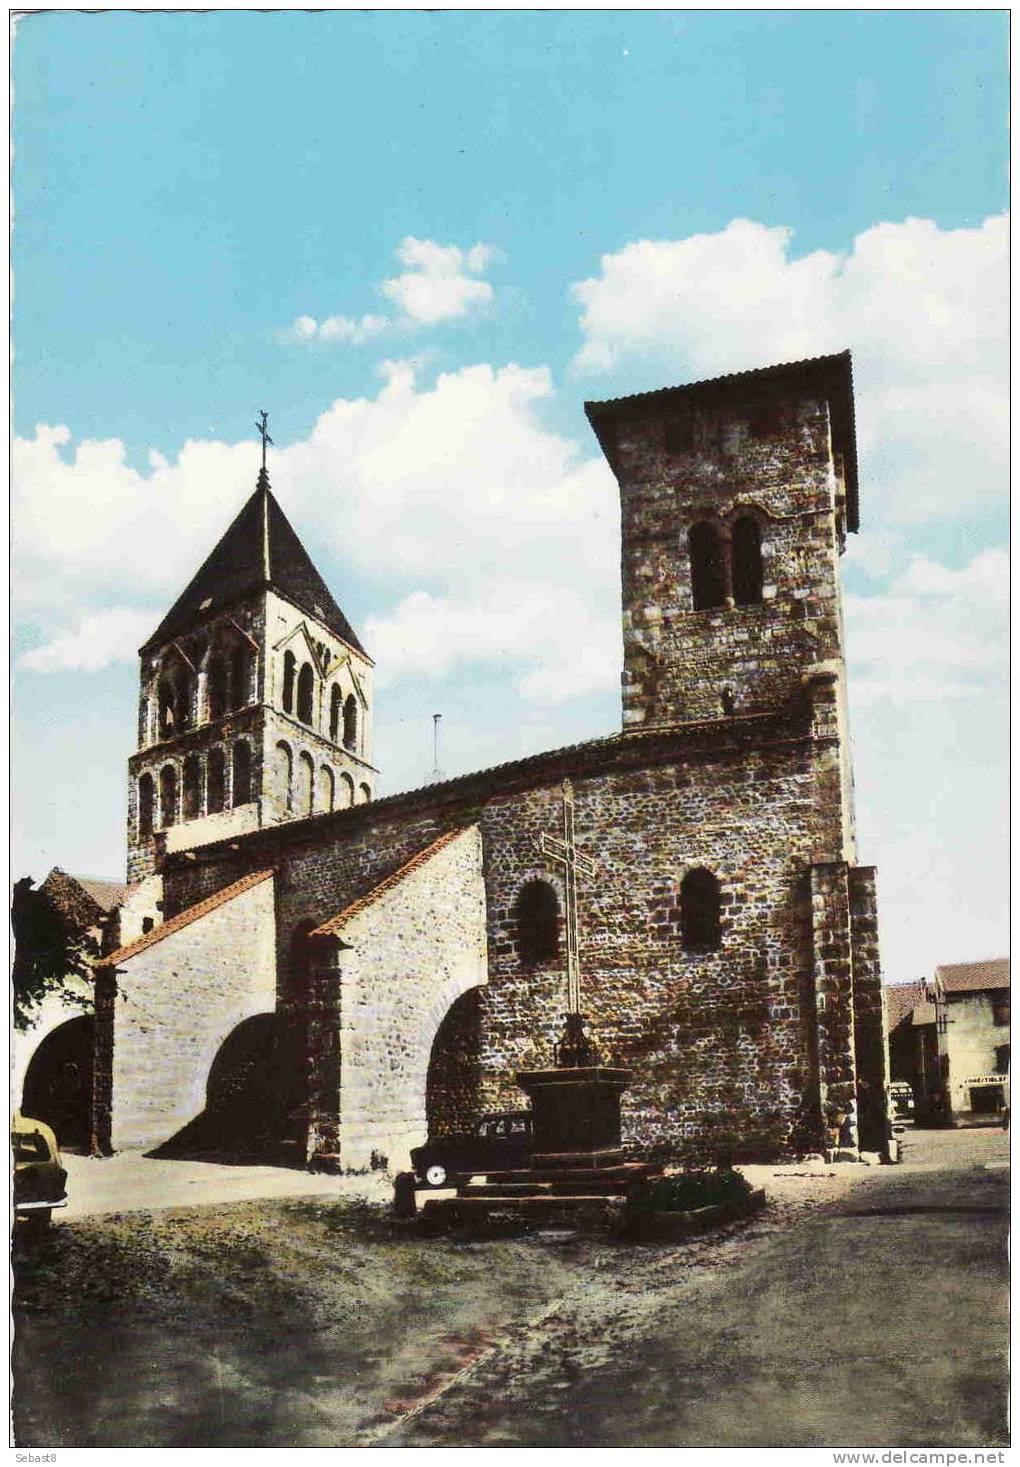 SAINT RAMBERT SUR LOIRE SON EGLISE ROMANE DU XI SIECLE - Saint Just Saint Rambert